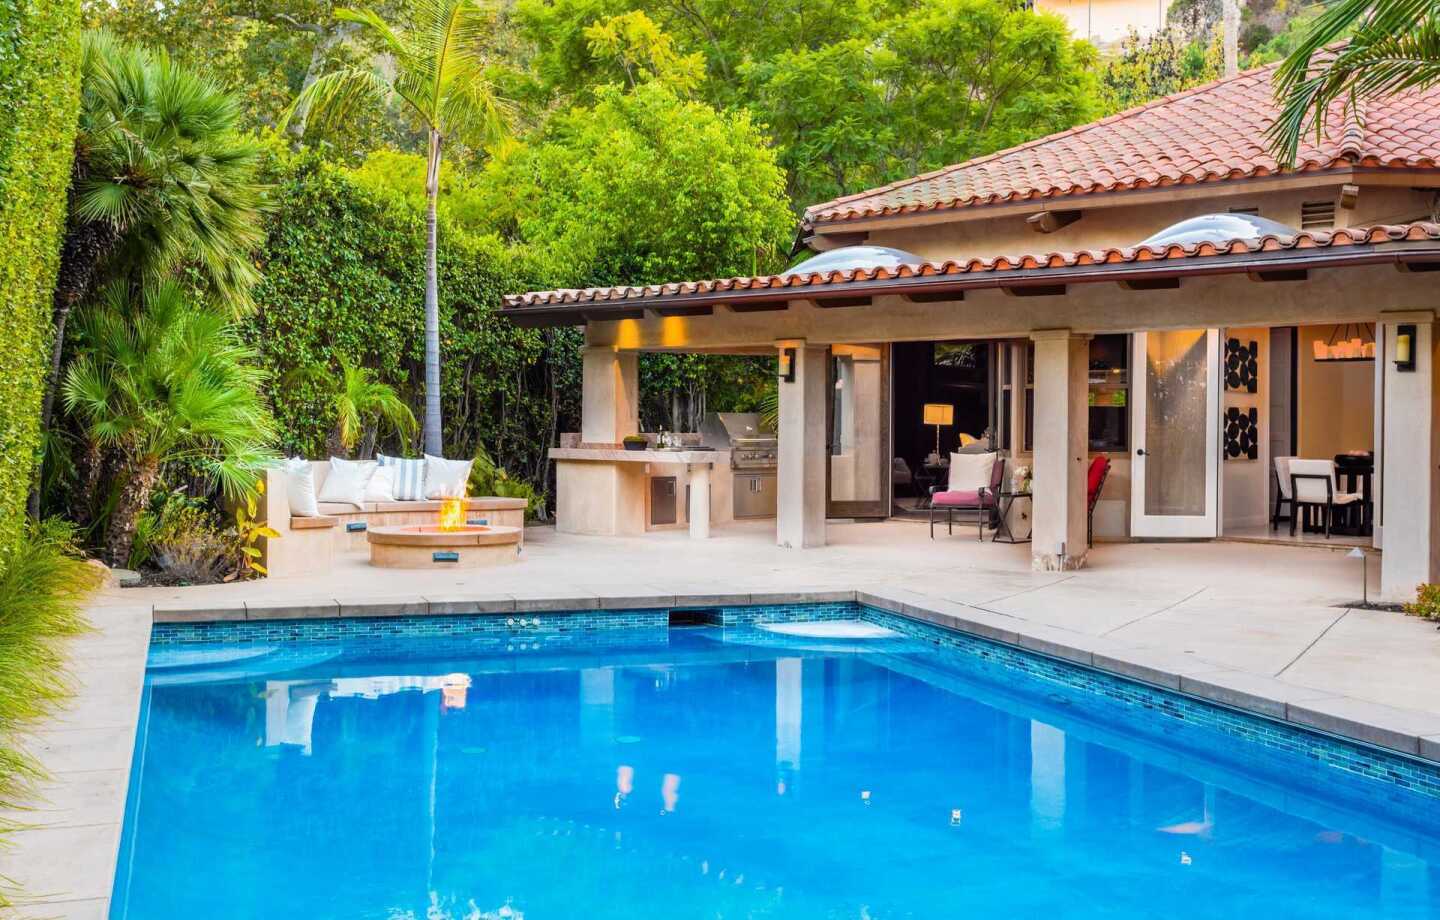 Chris Pratt and Anna Faris' marital home: the swimming pool